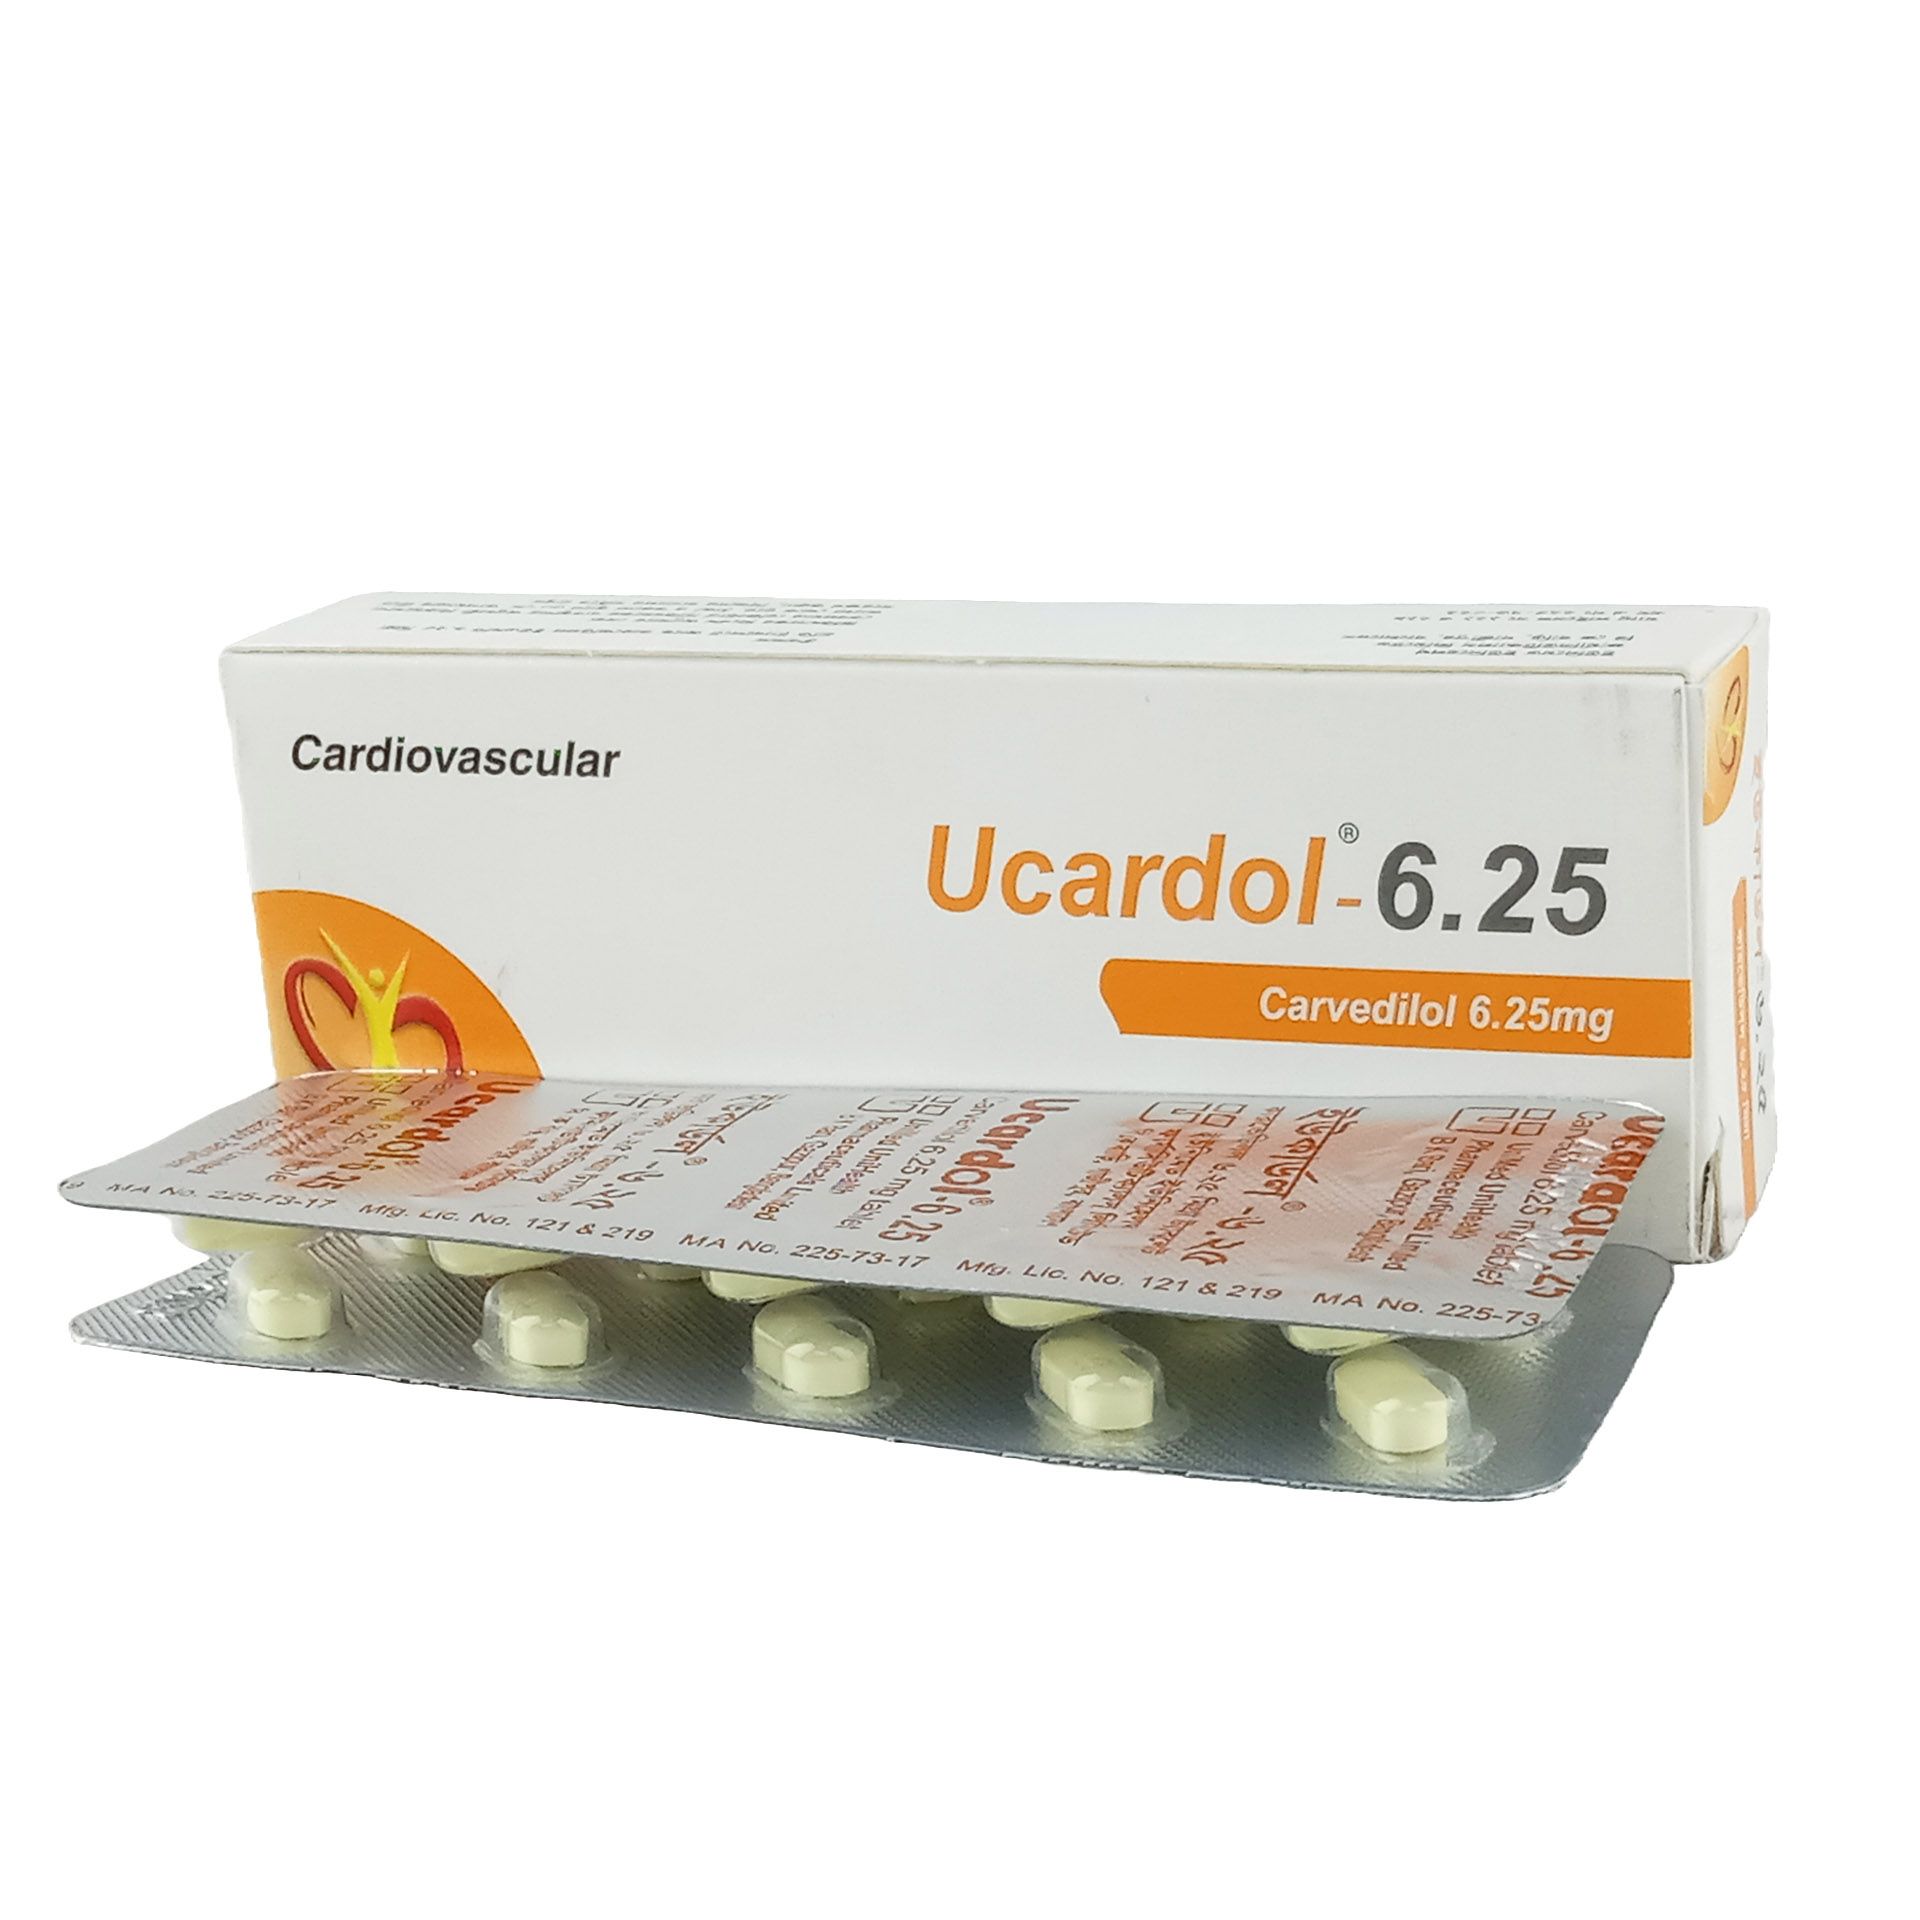 Ucardol 6.25 6.25mg Tablet